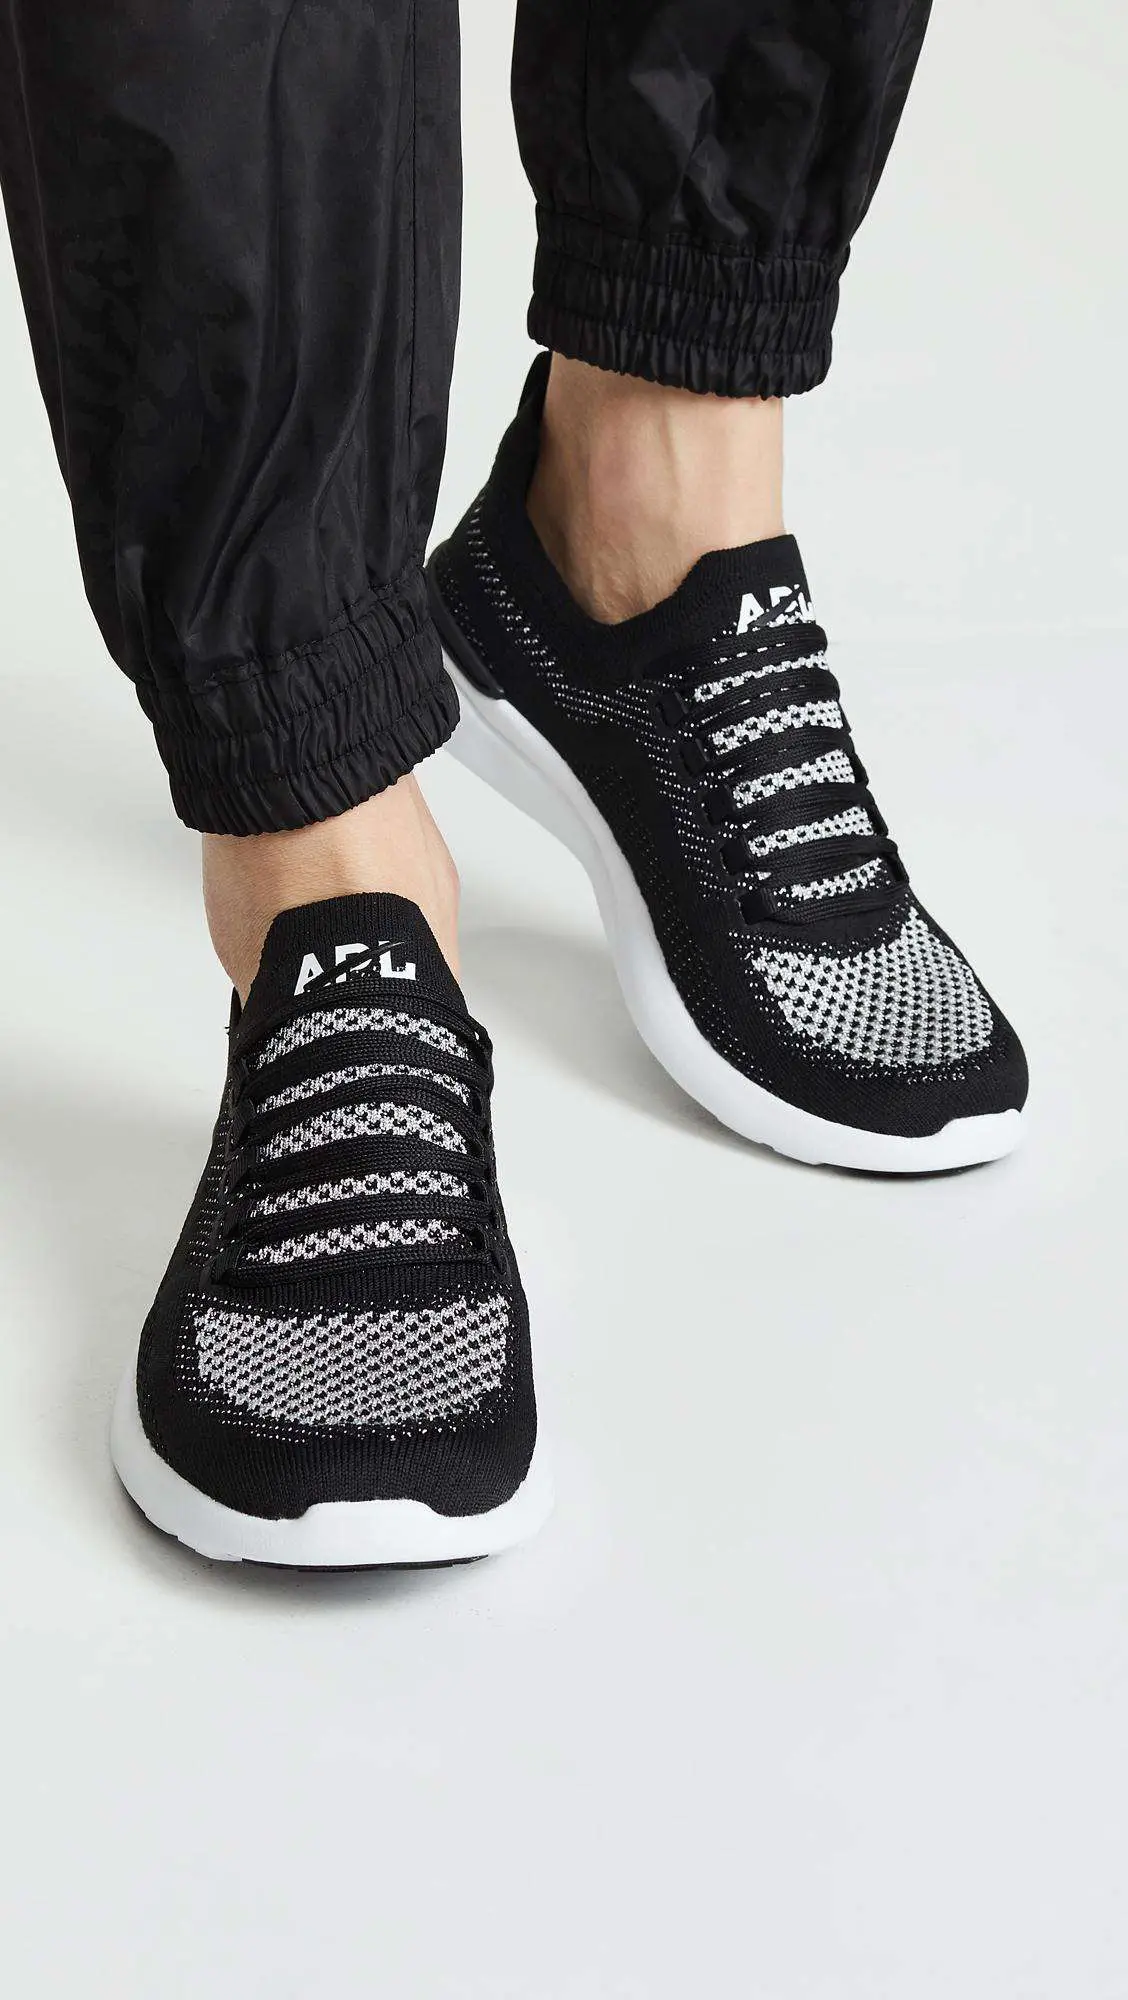 APL Shoes Techloom Breeze Sneakers in Black/Metallic ...